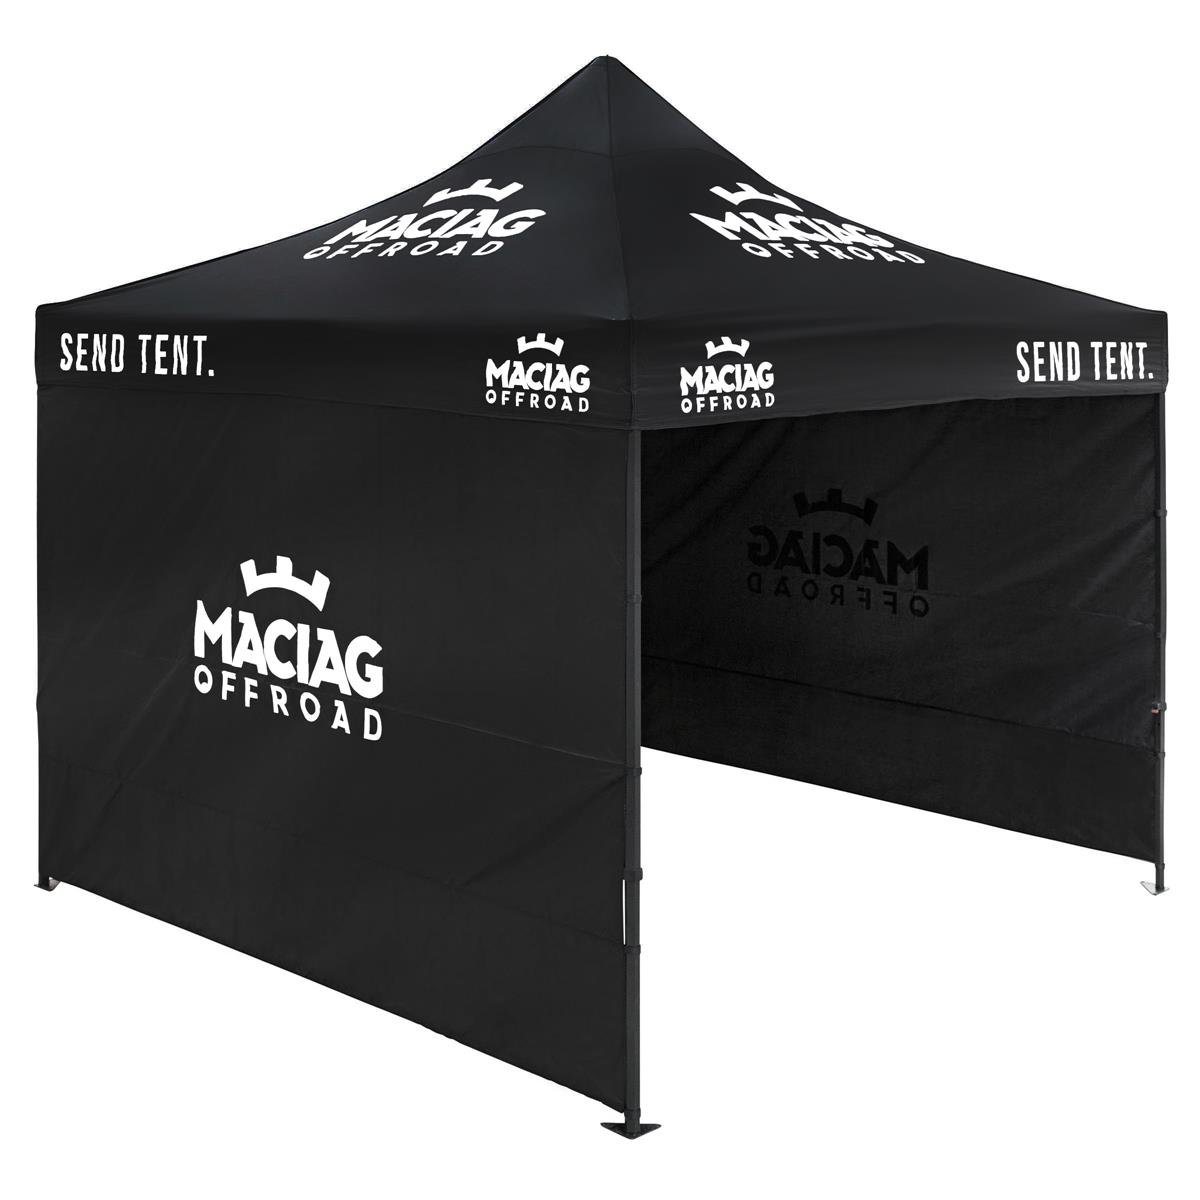 Maciag Offroad Race Tent 3x3 m SEND TENT. Full set with 3 sidewalls, black/white